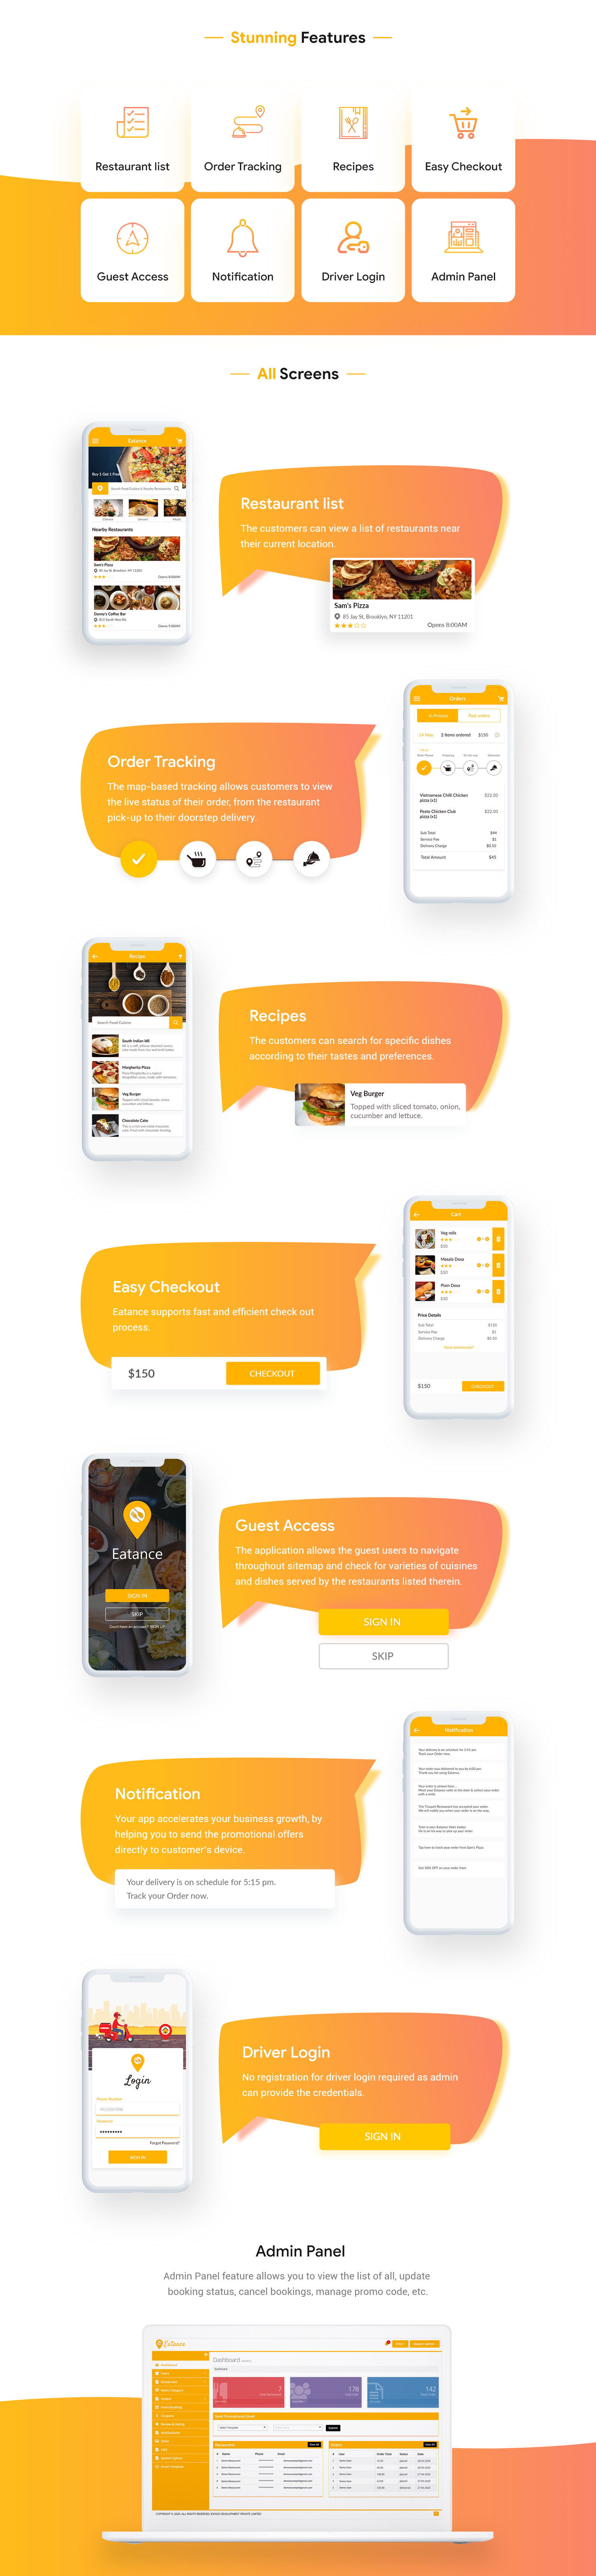 Multi Restaurant App